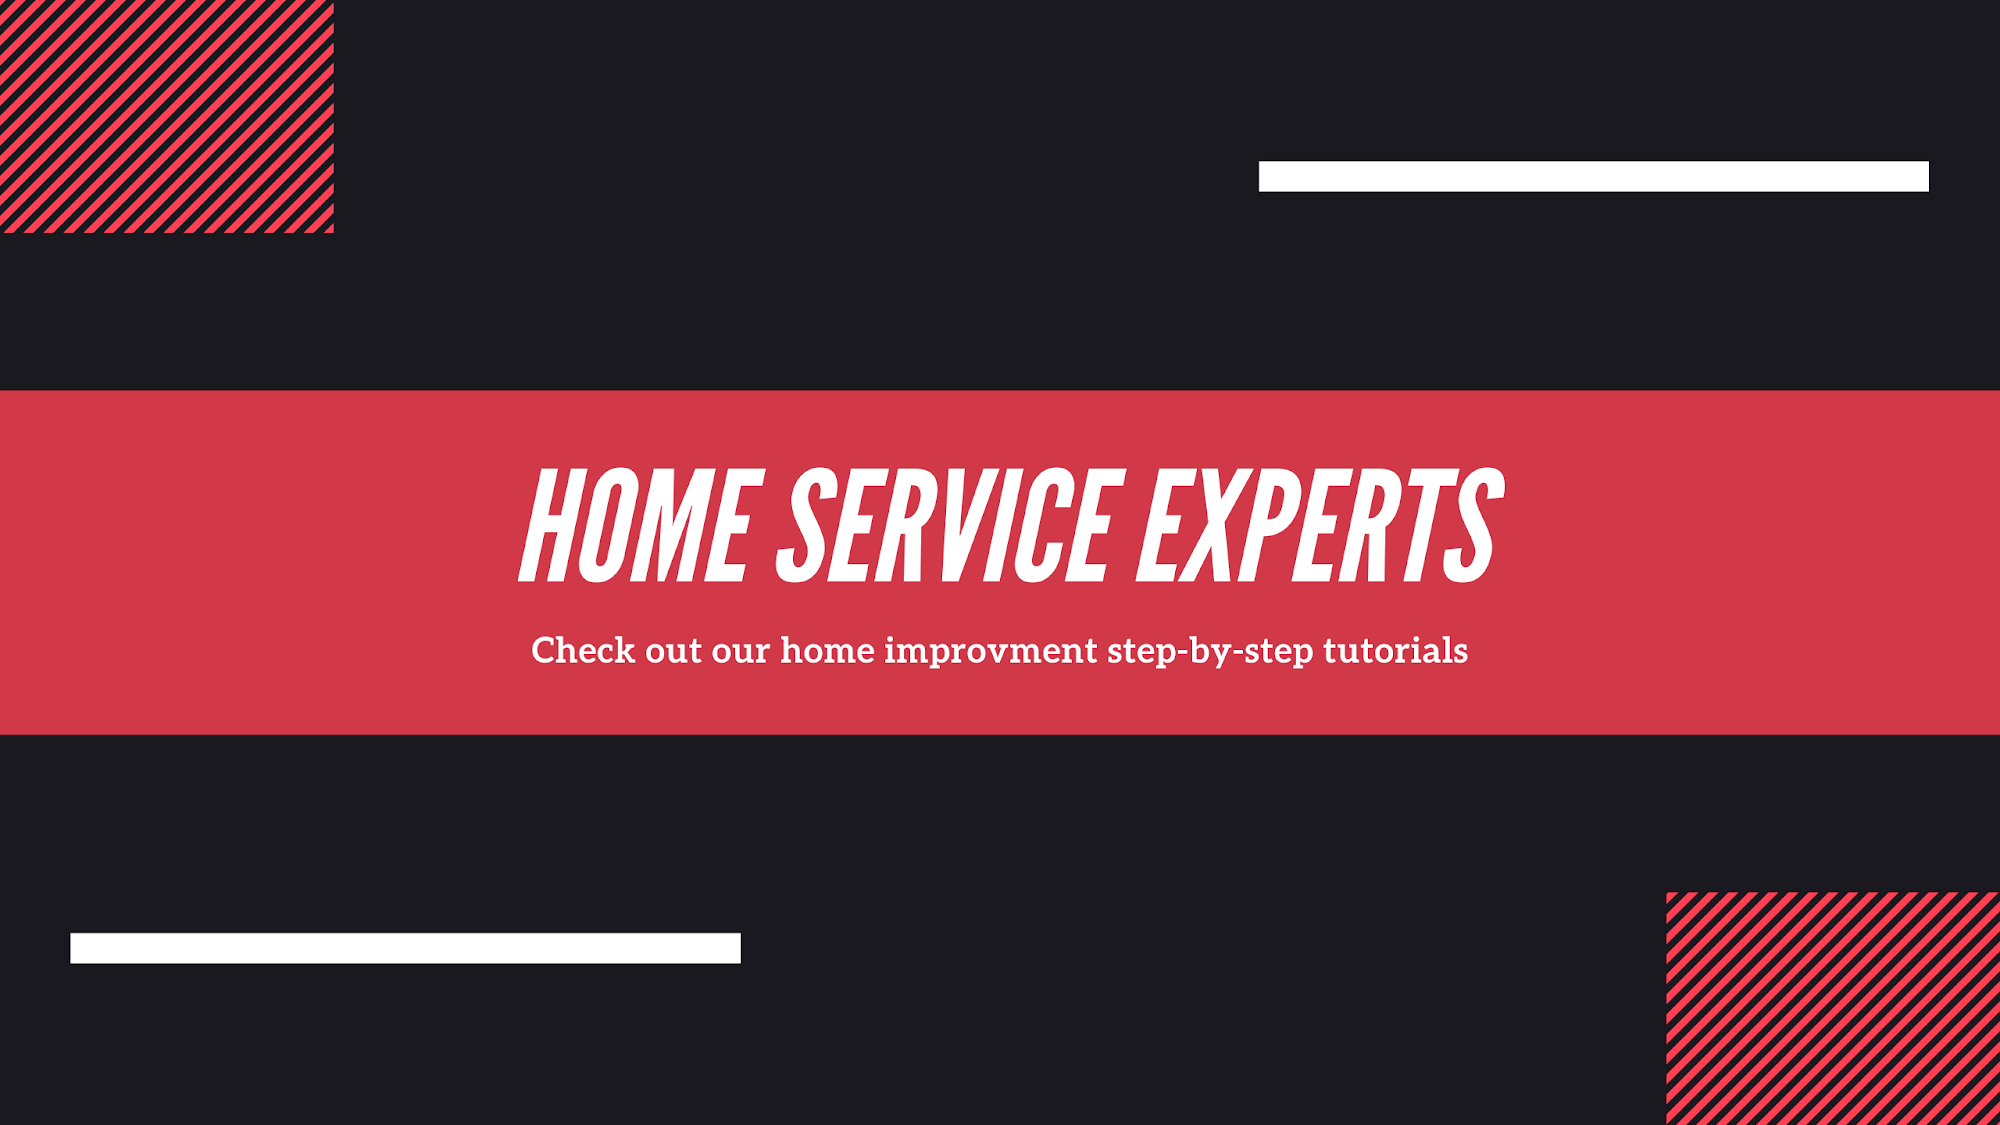 Central Ohio Home Services